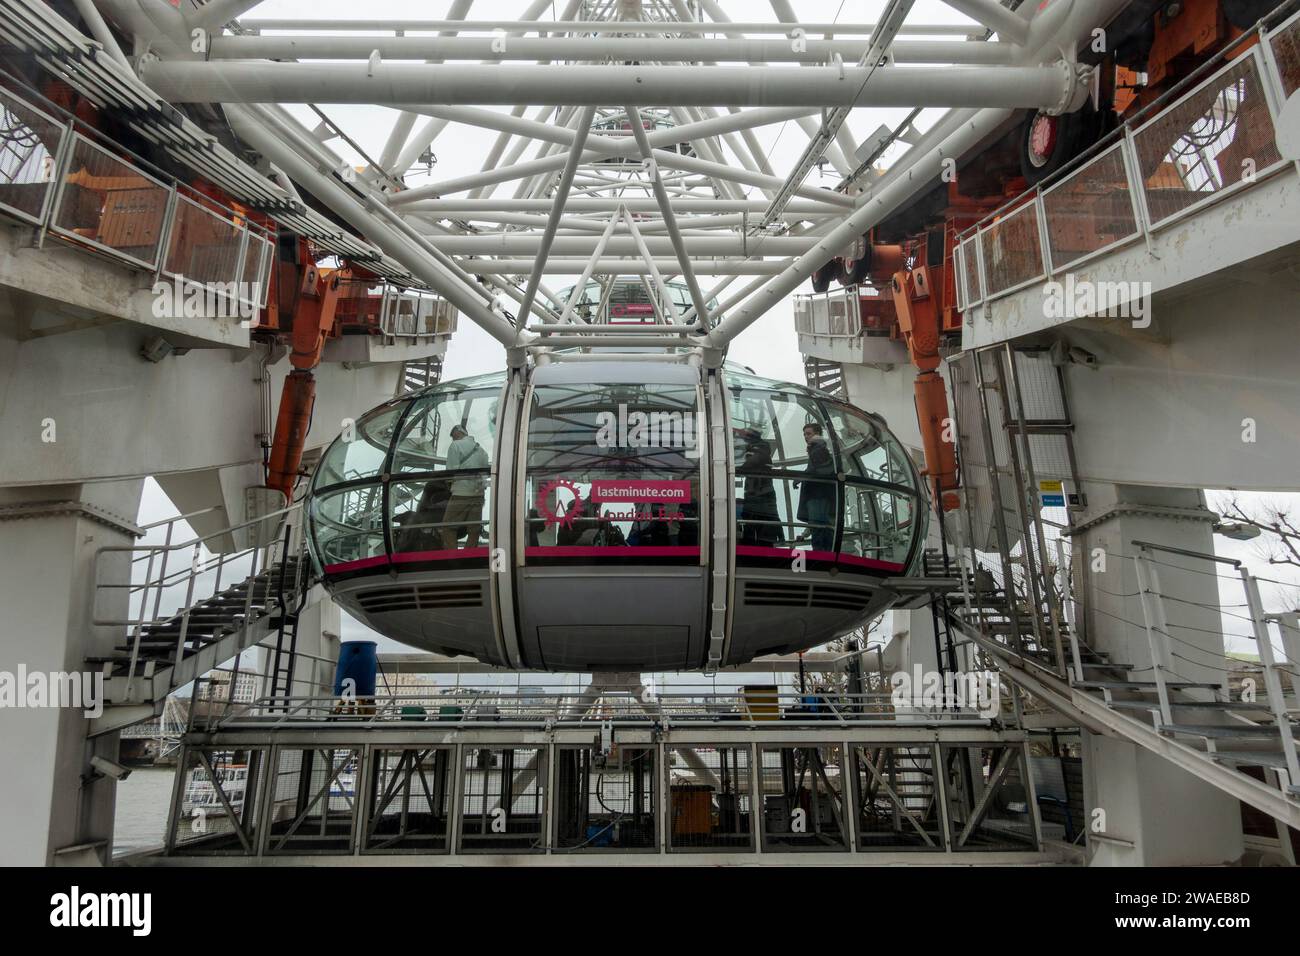 Passagiere in der Kapsel, dem London Eye oder dem Millennium Wheel, Stockfoto